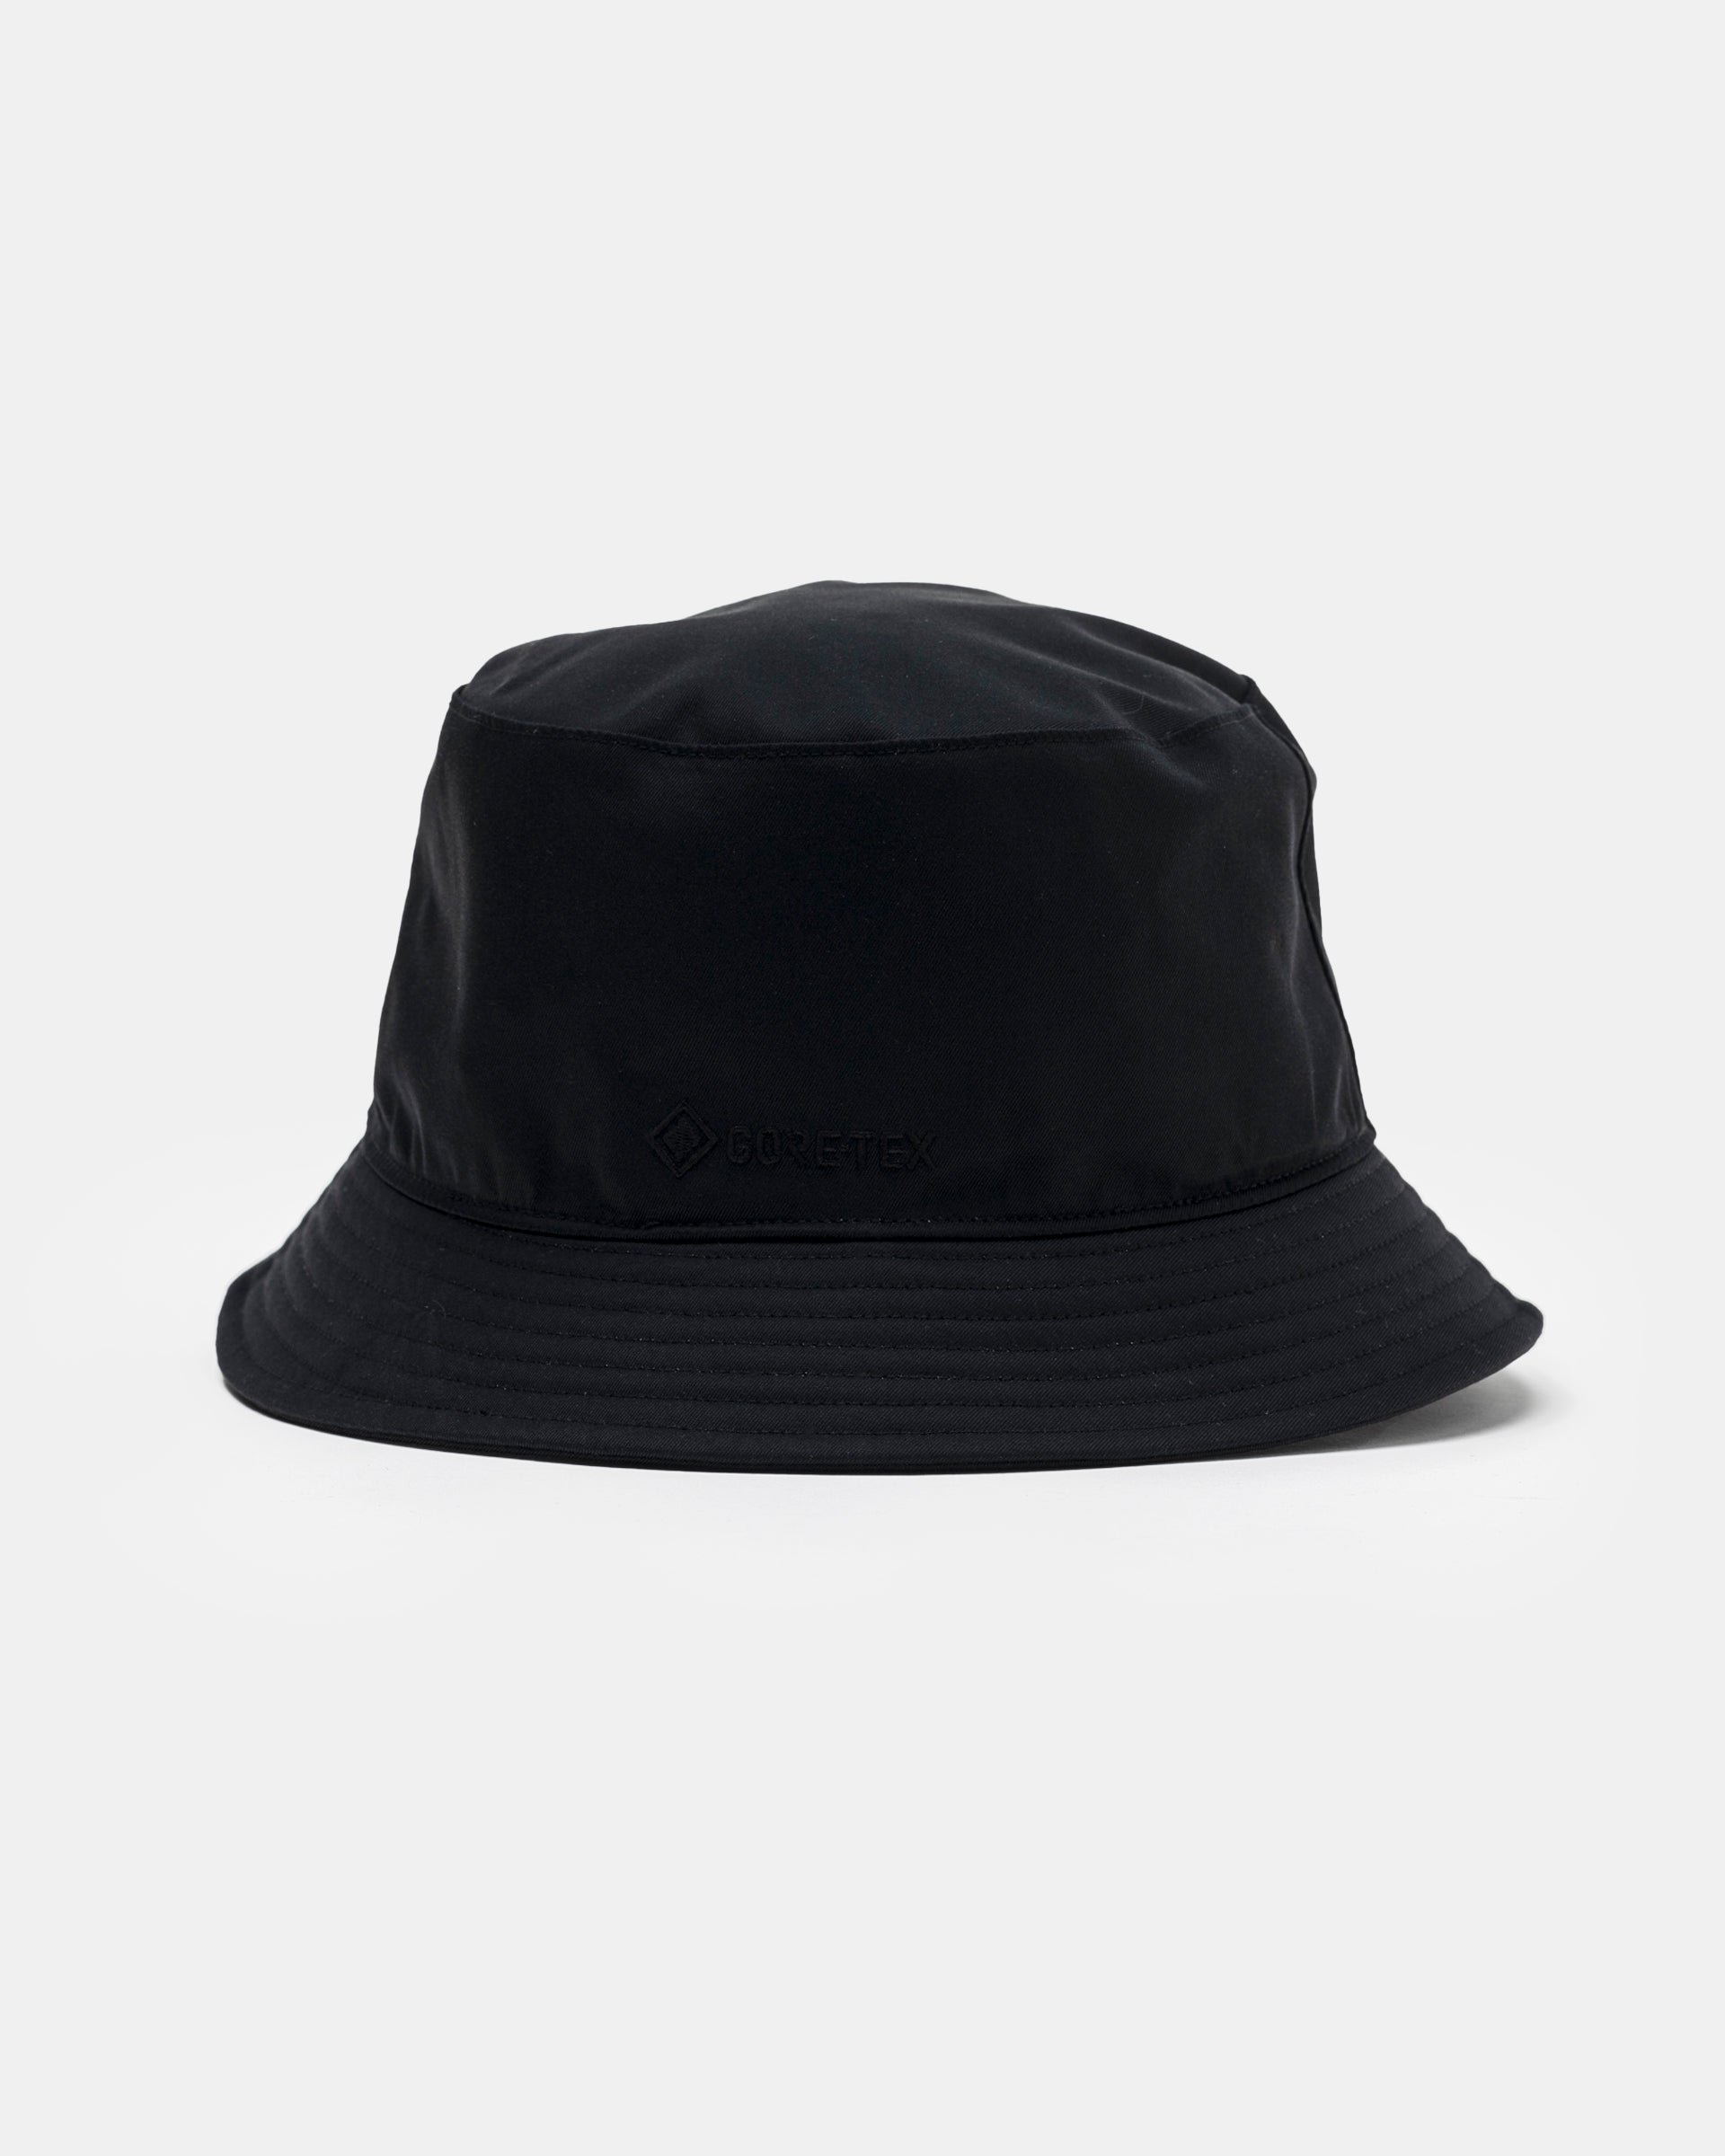 GORE-TEX Hat in Black